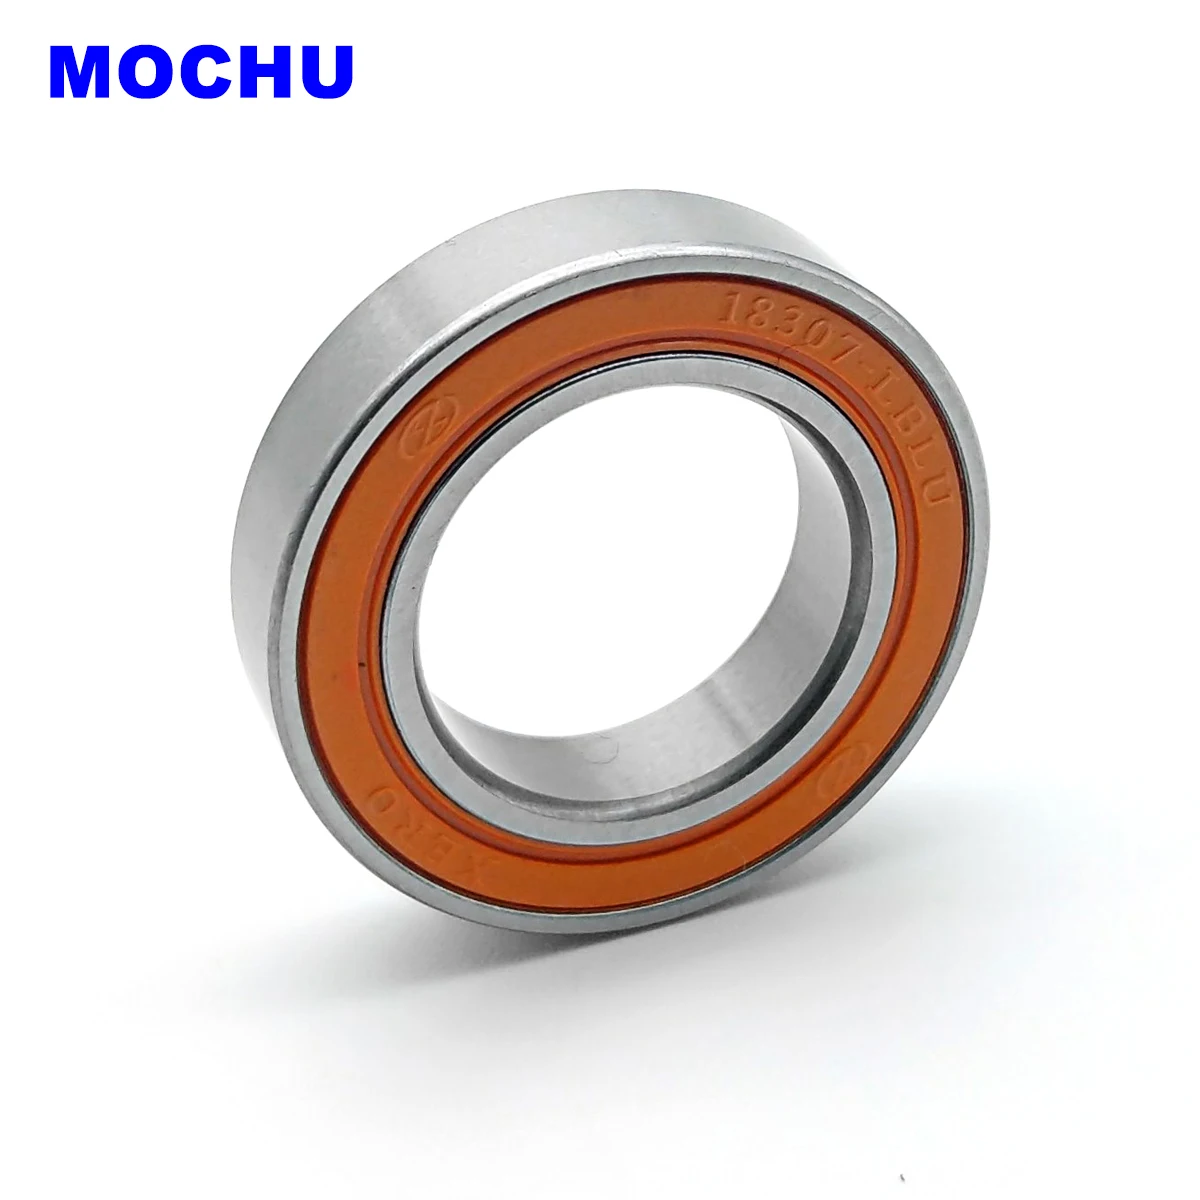 10pcs Bearing 18307-LBLU 18307 18x30x7 61903-18RS MOCHU Miniature Thin Wall Bearing Shielding Ball Bearing Bicycle bearing